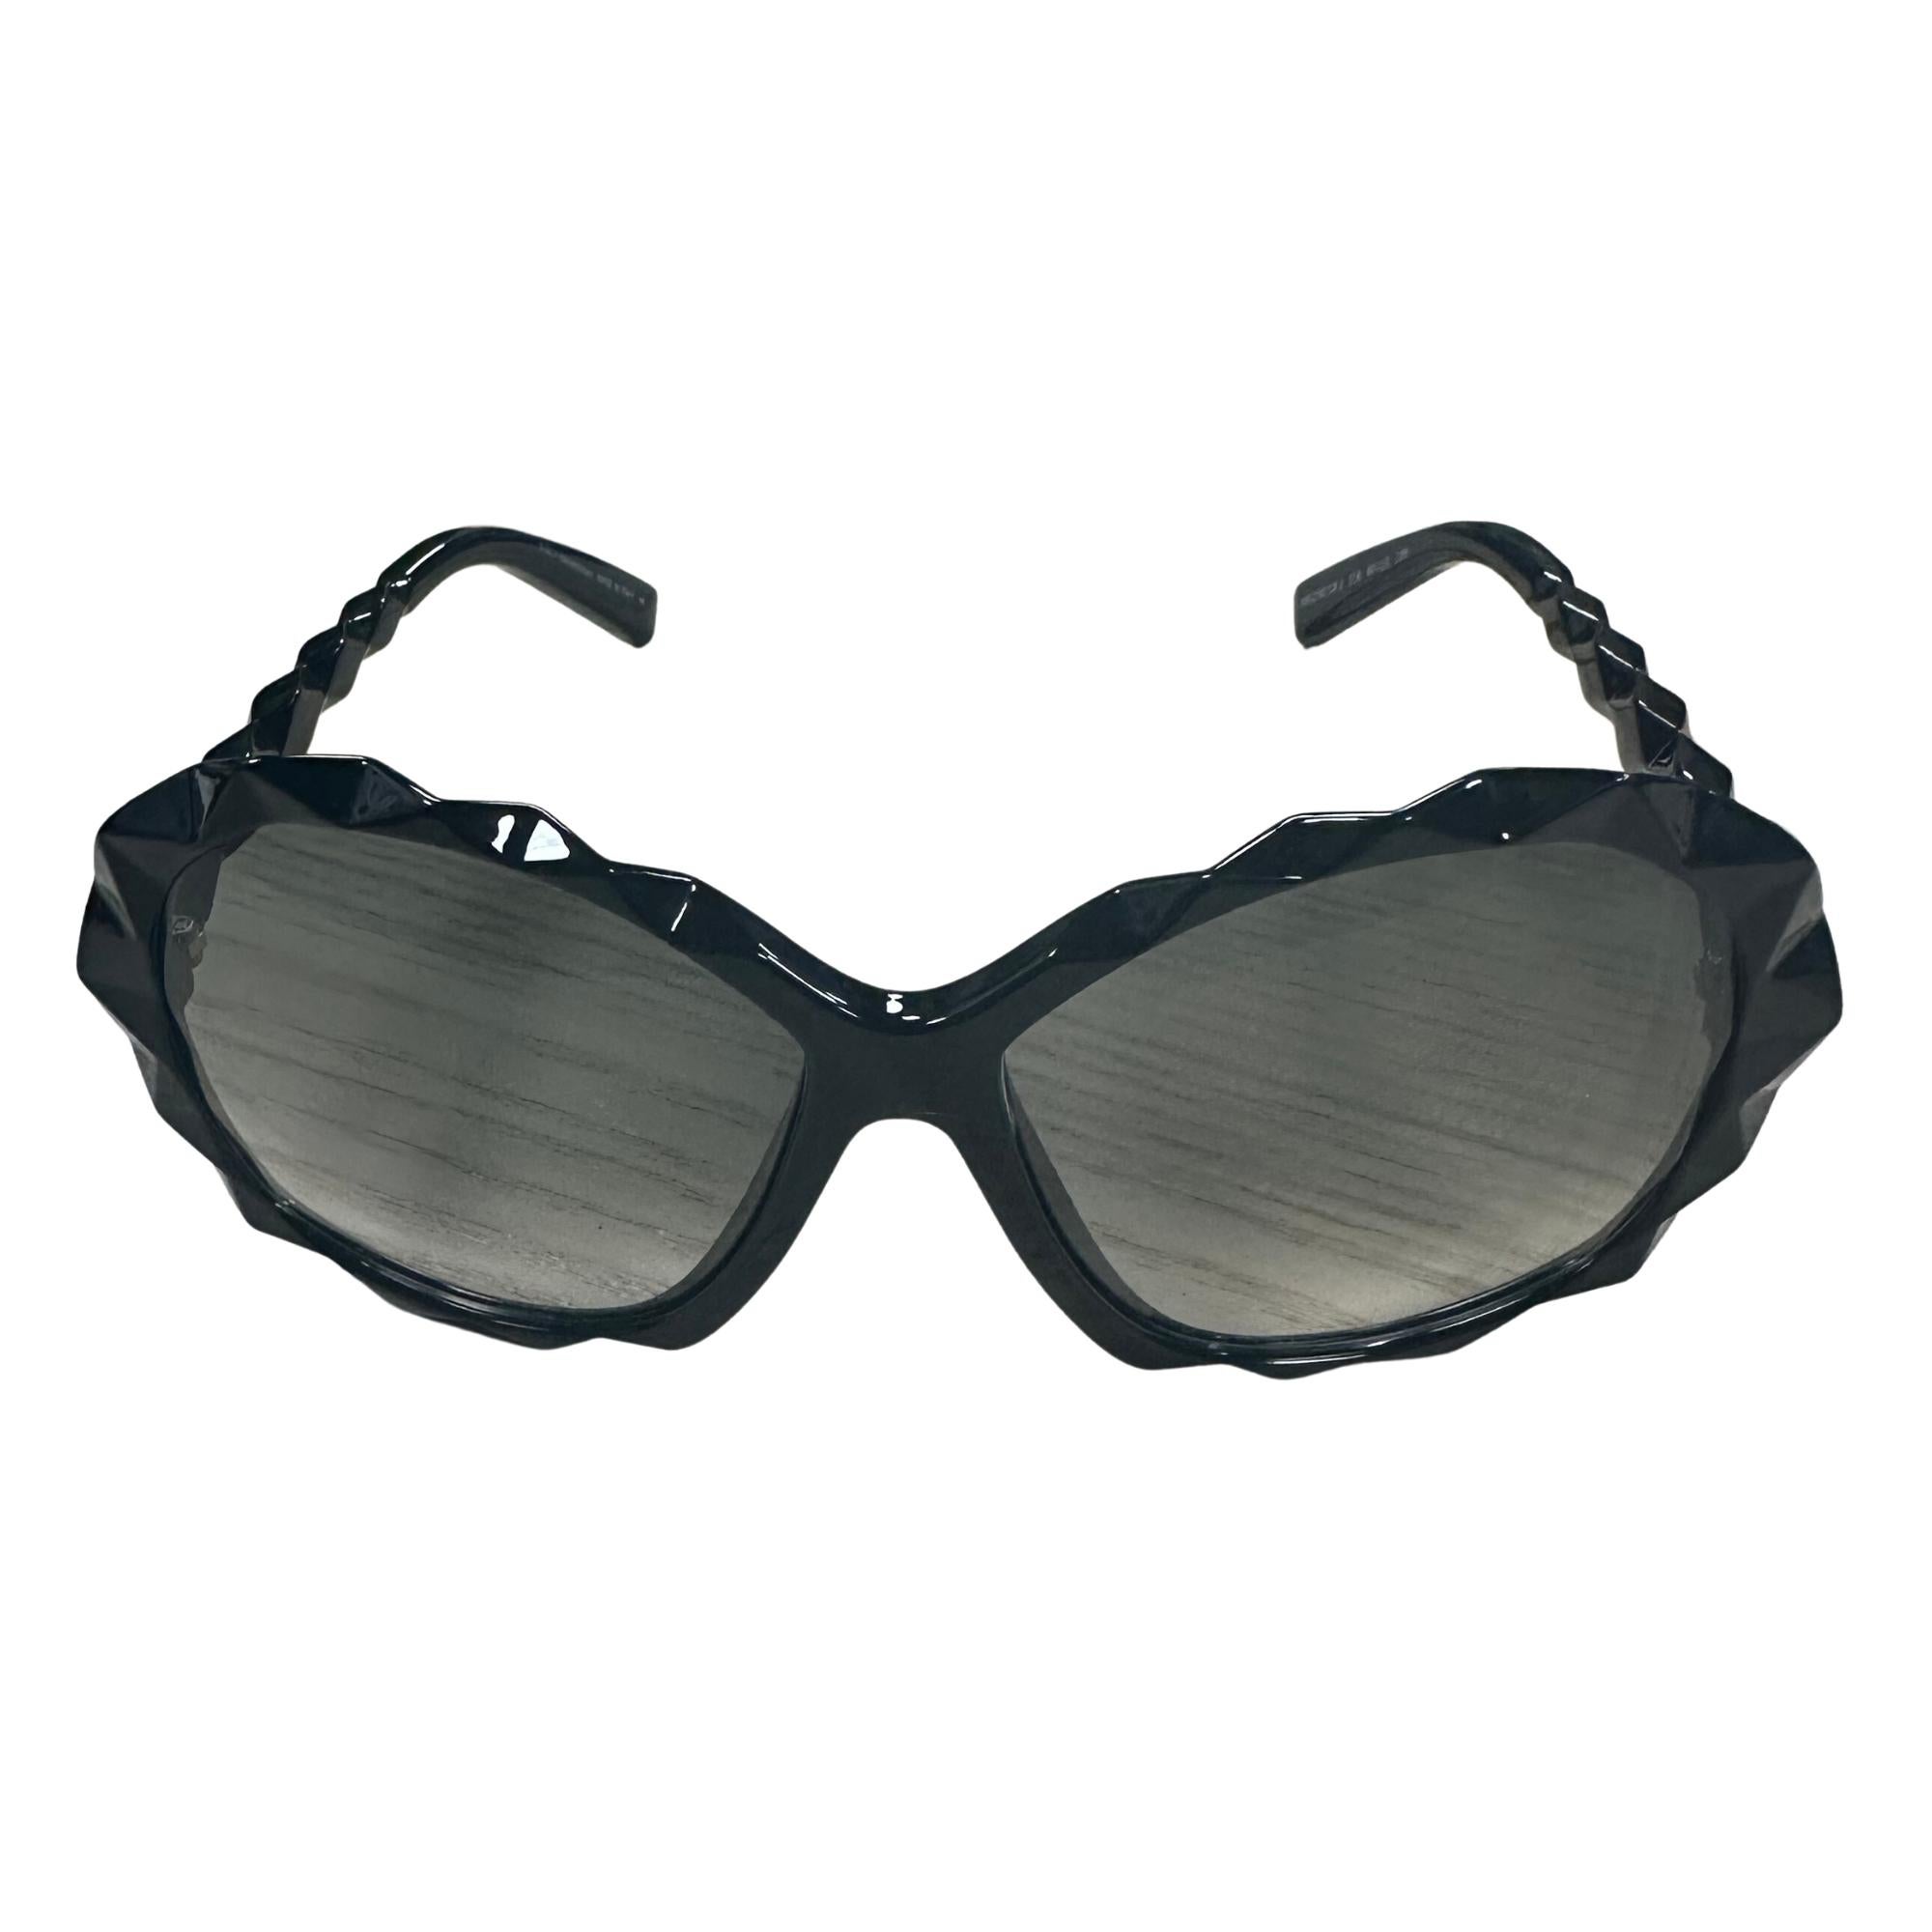 Swarovski Black Sunglasses In Good Condition For Sale In Montreal, Quebec